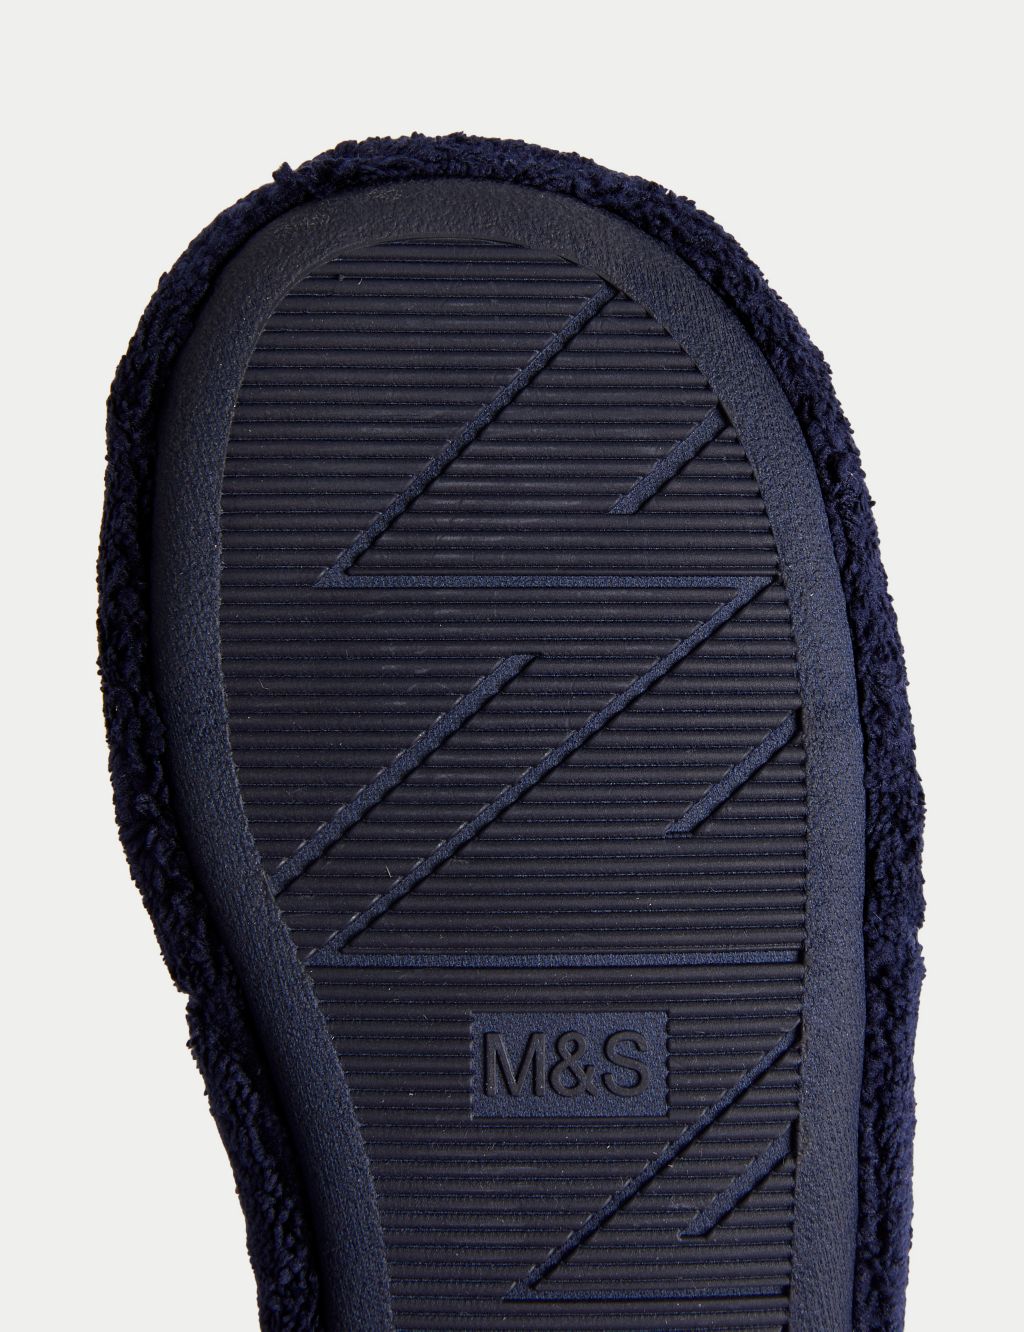 Kids' Slipper Boots (4-7 Yrs) image 4